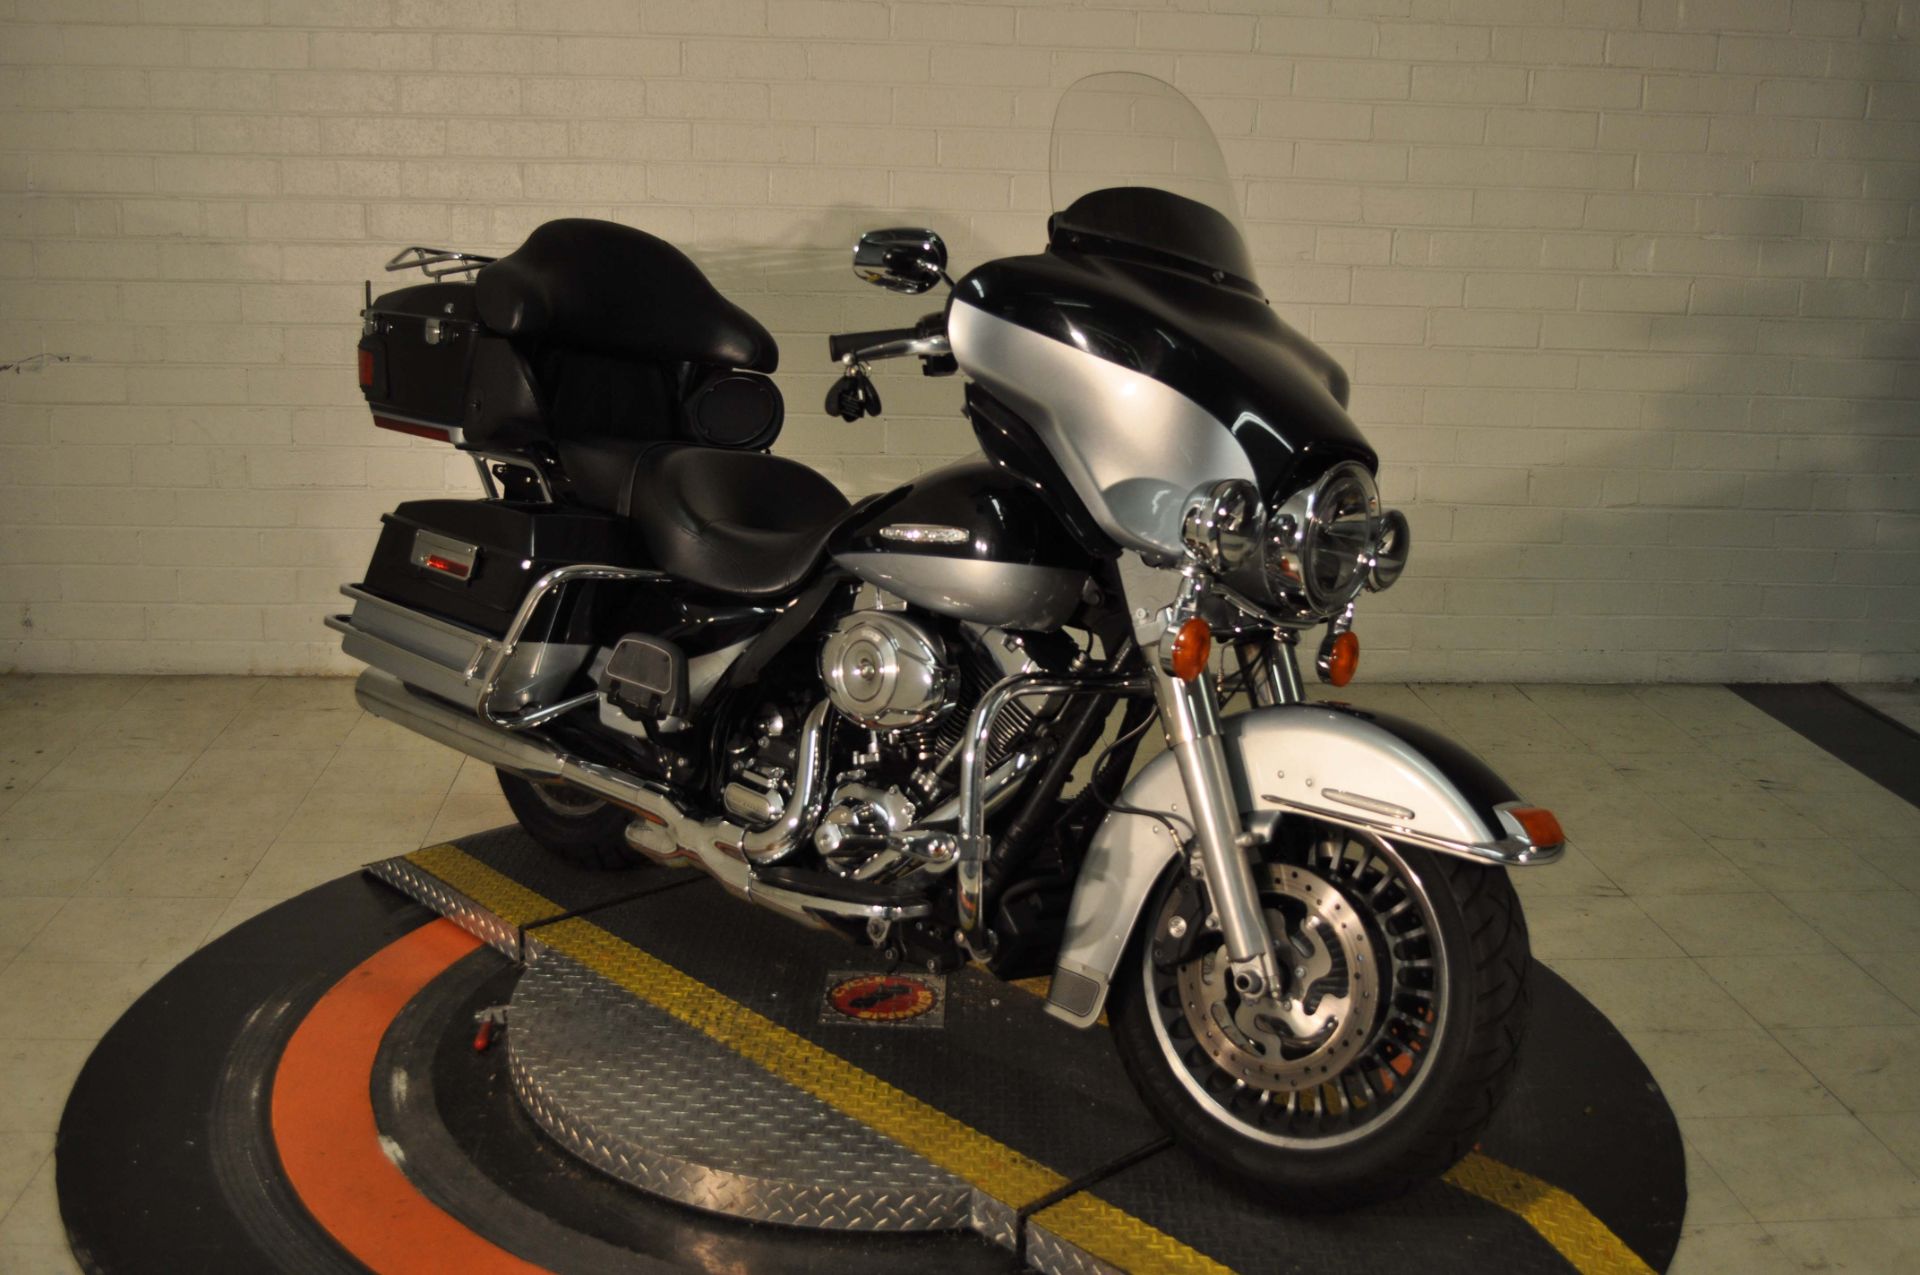 2013 Harley-Davidson Electra Glide® Ultra Limited in Winston Salem, North Carolina - Photo 9